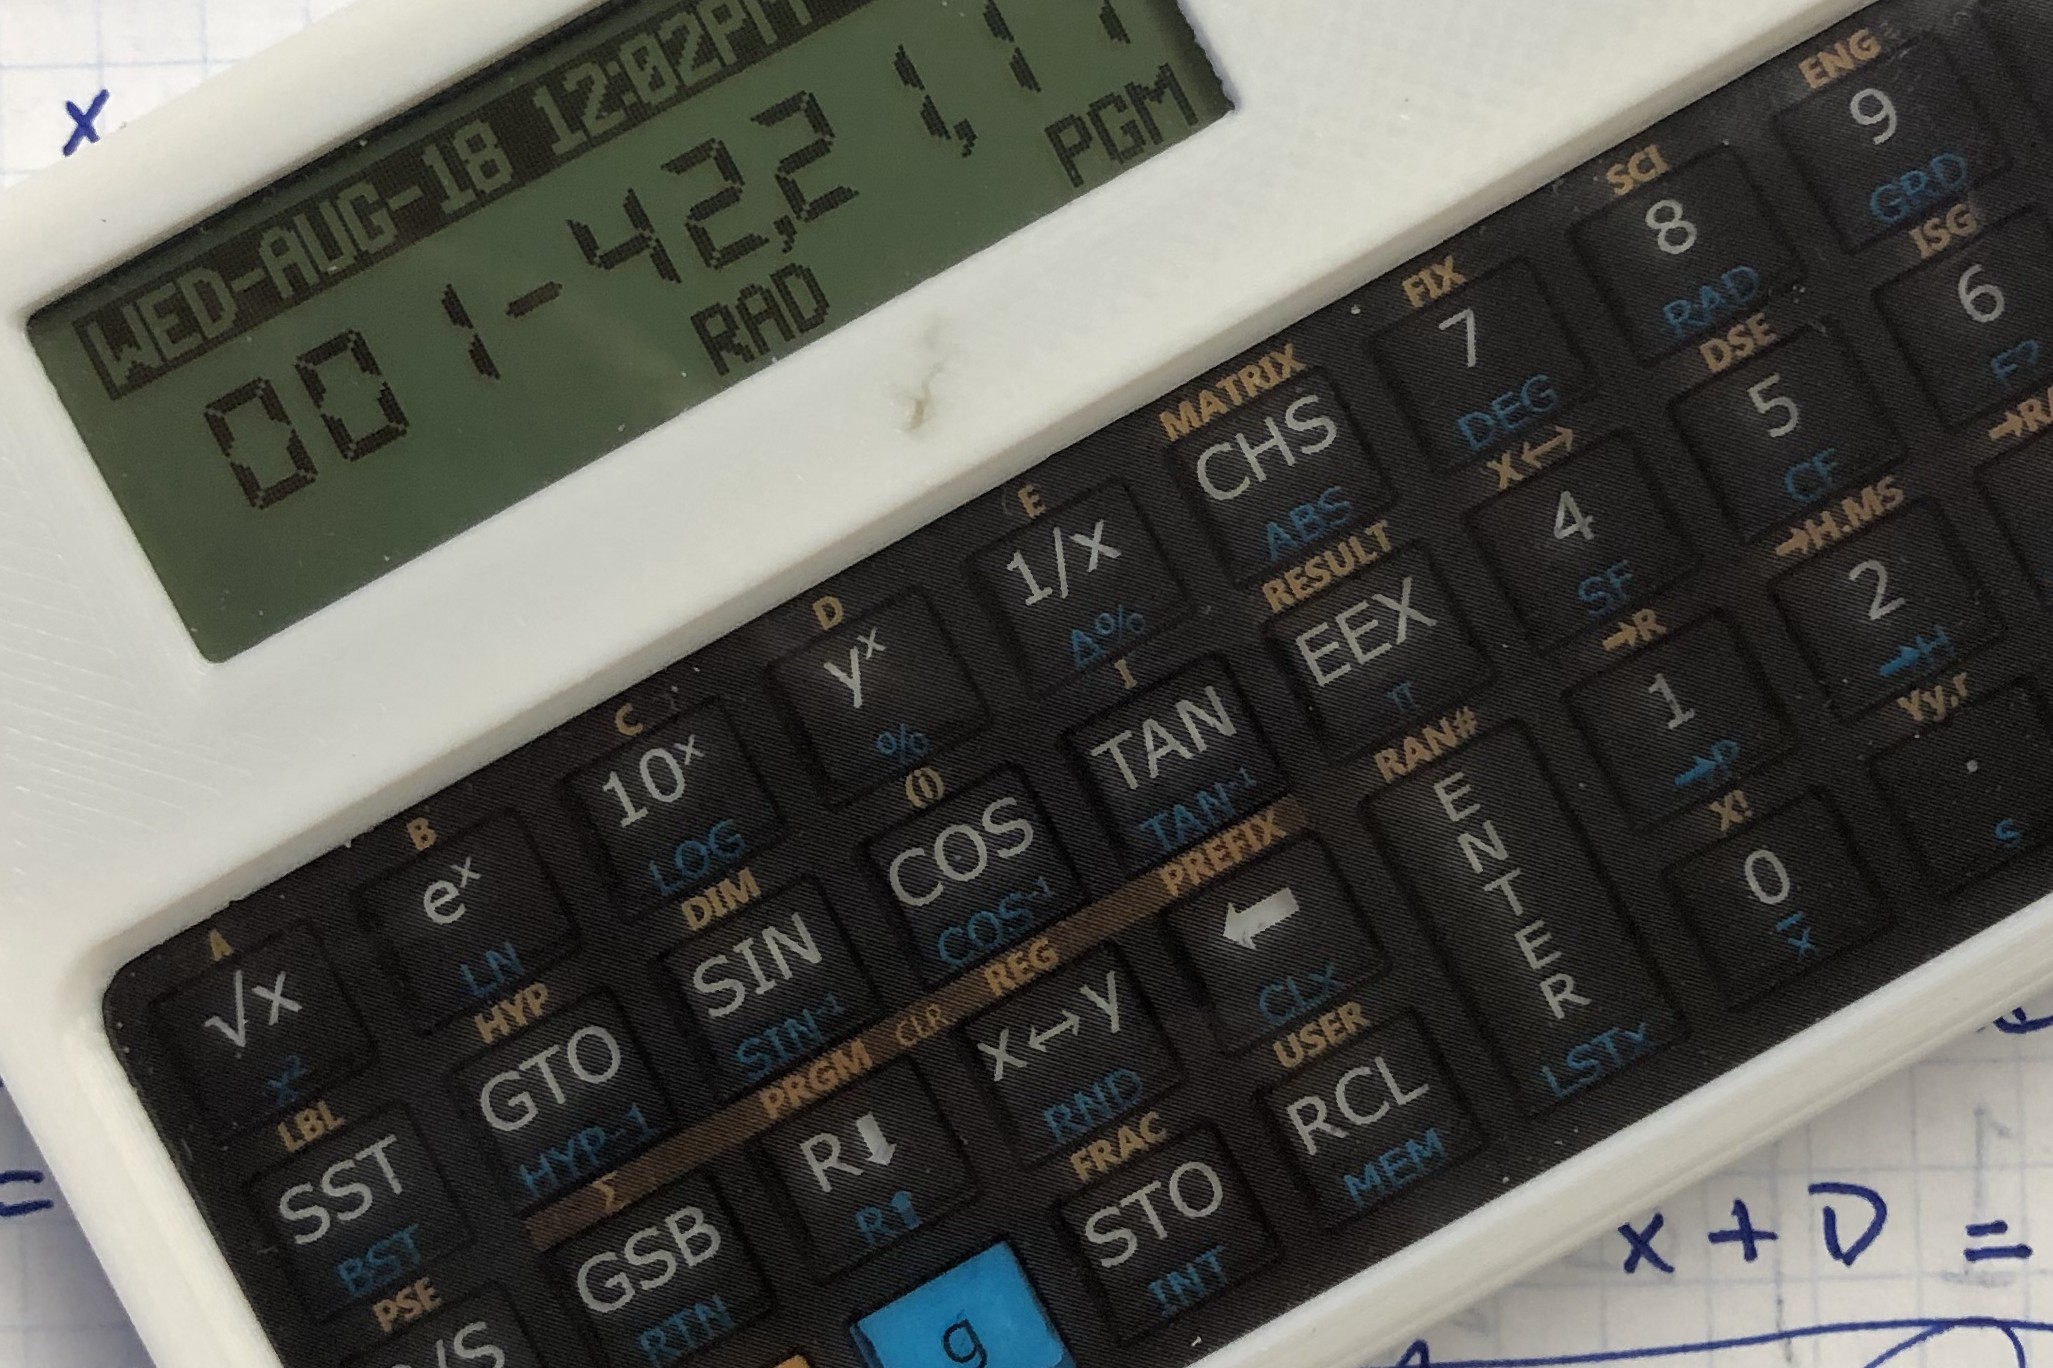 hp calculator emulator